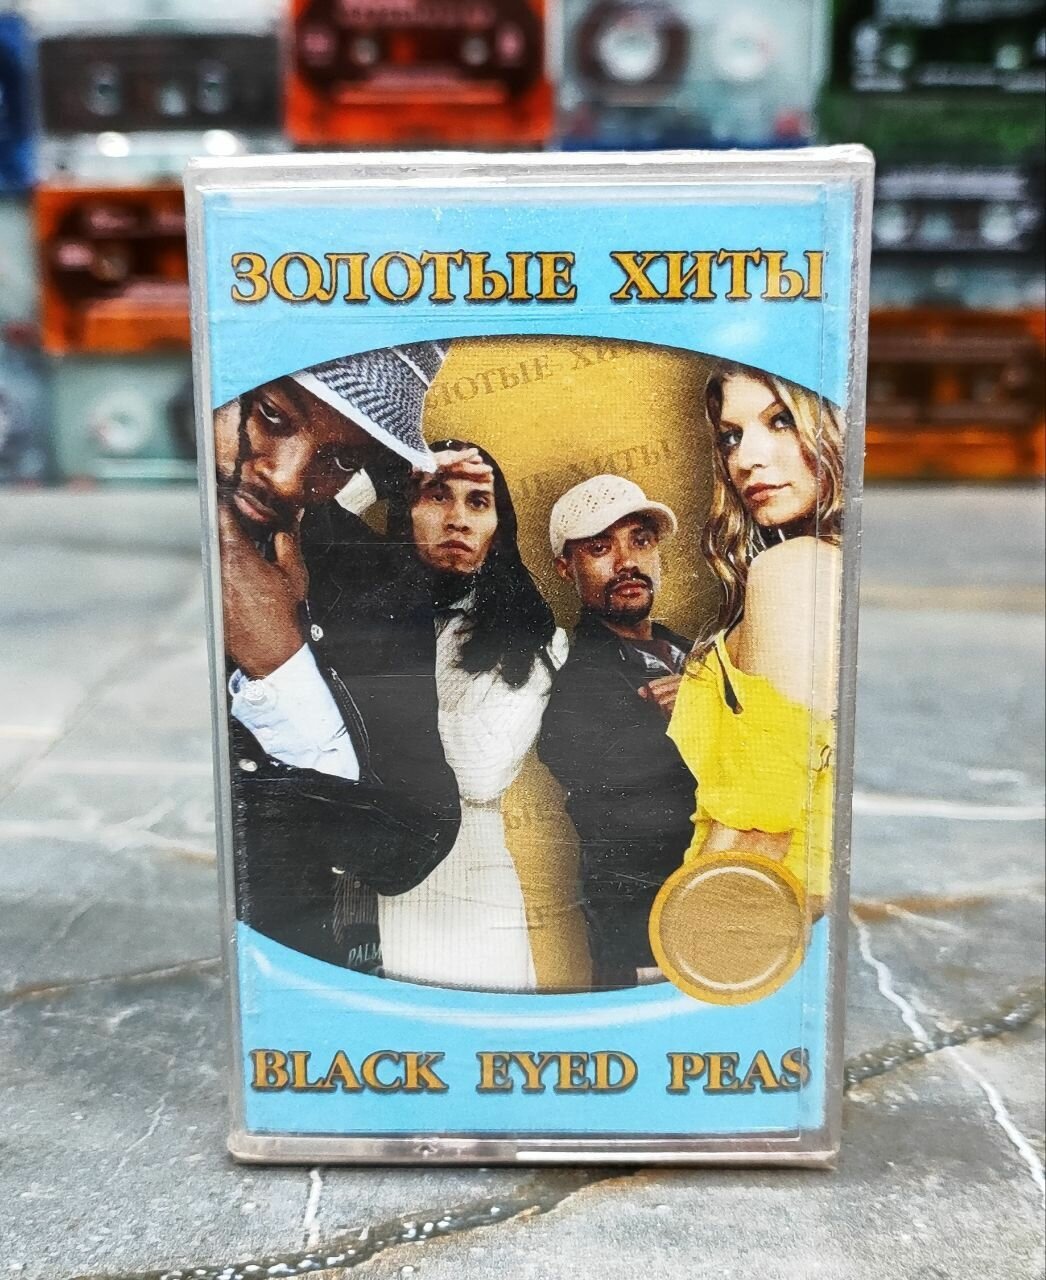 The Black Eyed Peas - Золотые хиты, аудиокассета, кассета (МС), 2005, оригинал